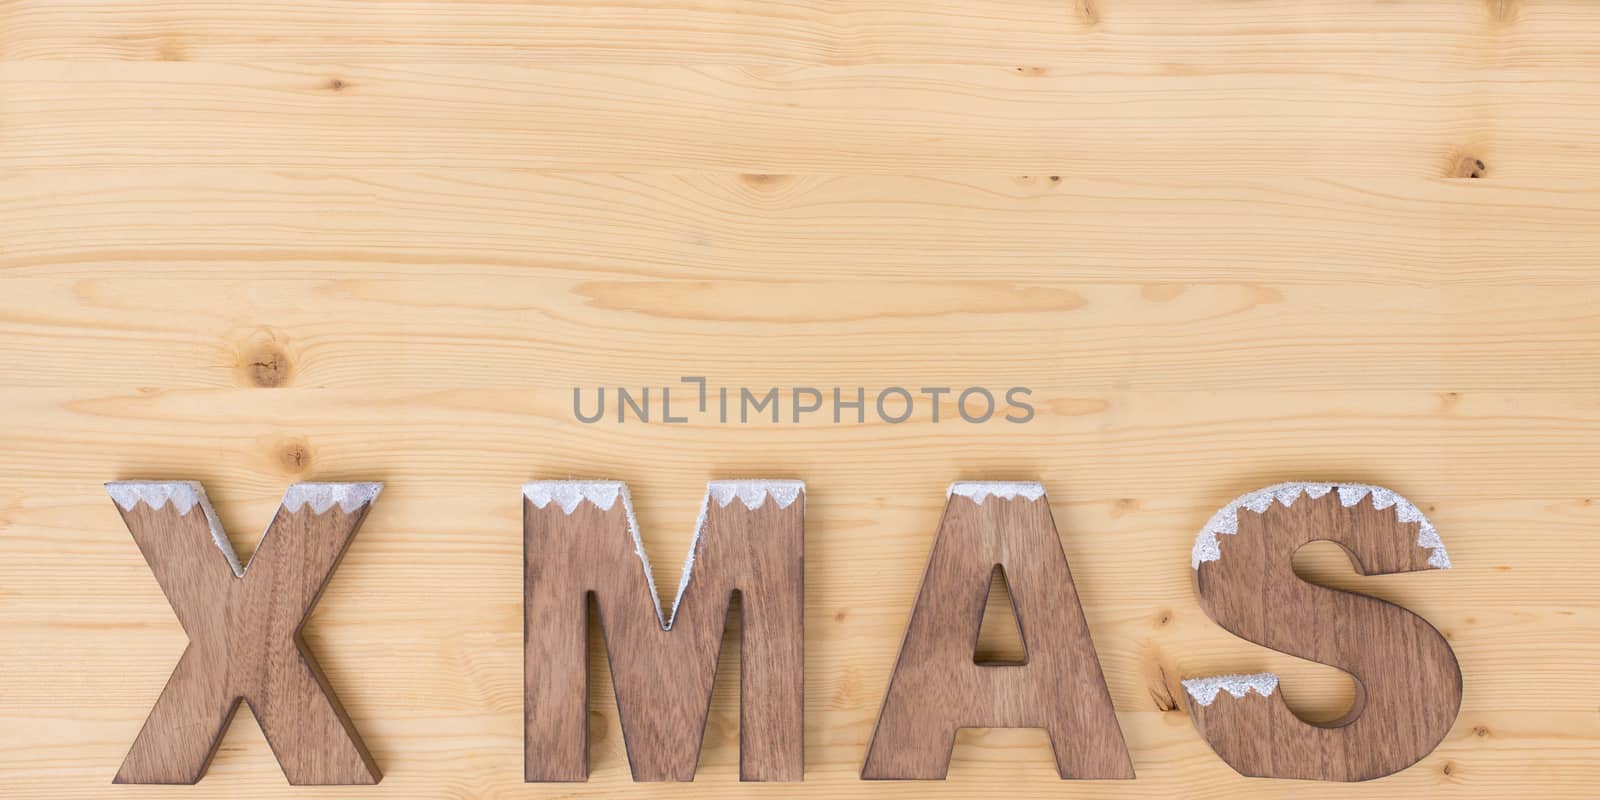 The word X MAS made on wood on wood